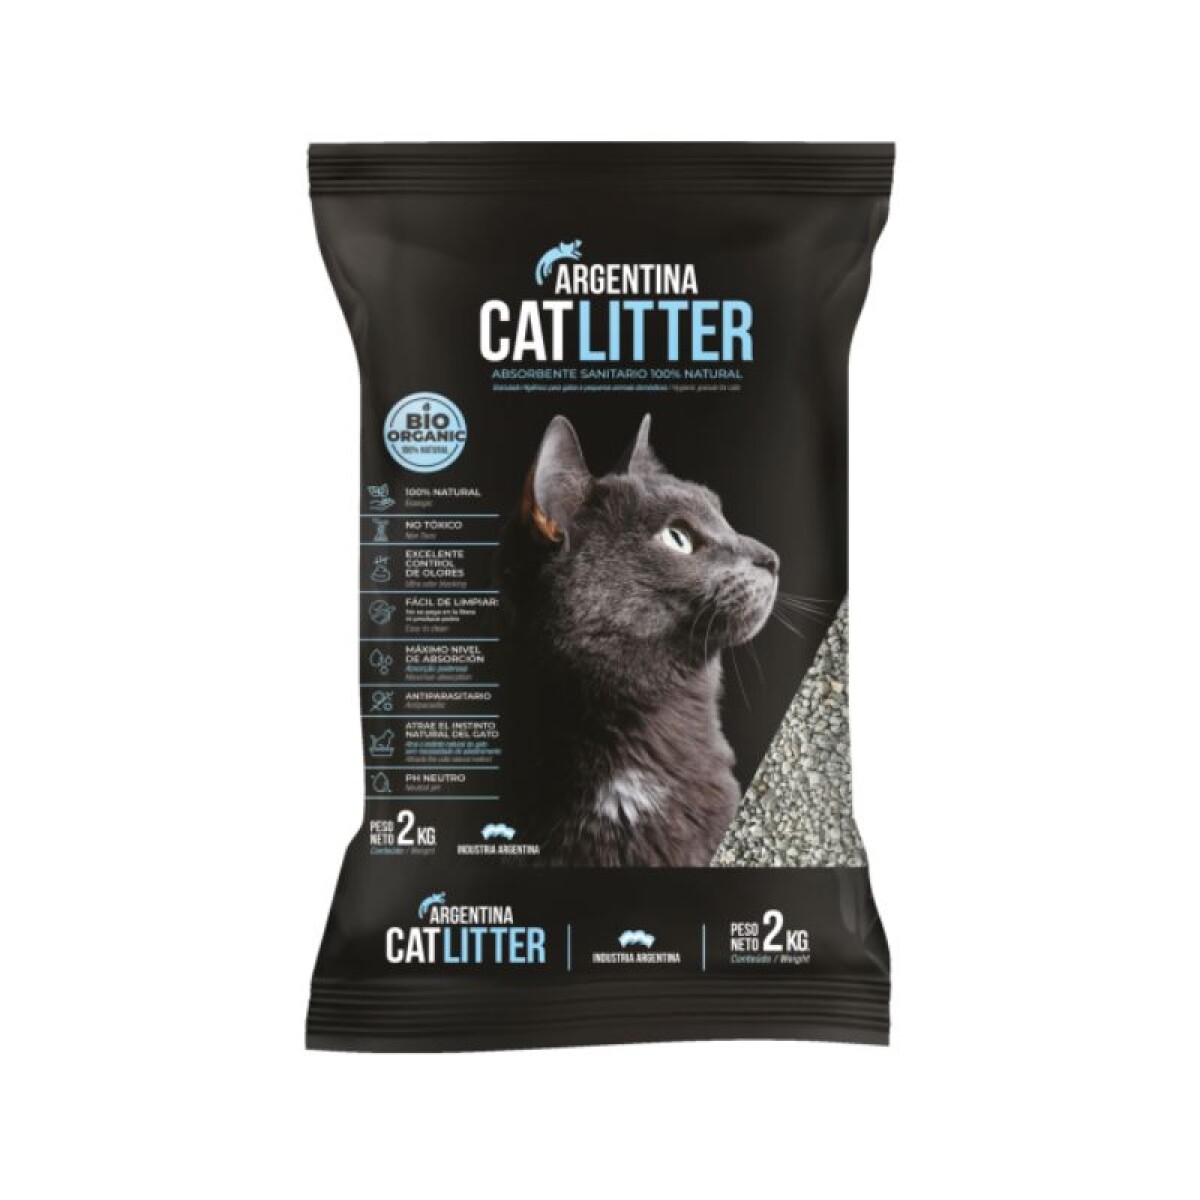 ARGENTINA CAT LITTER X 2KG - Argentina Cat Litter X 2kg 